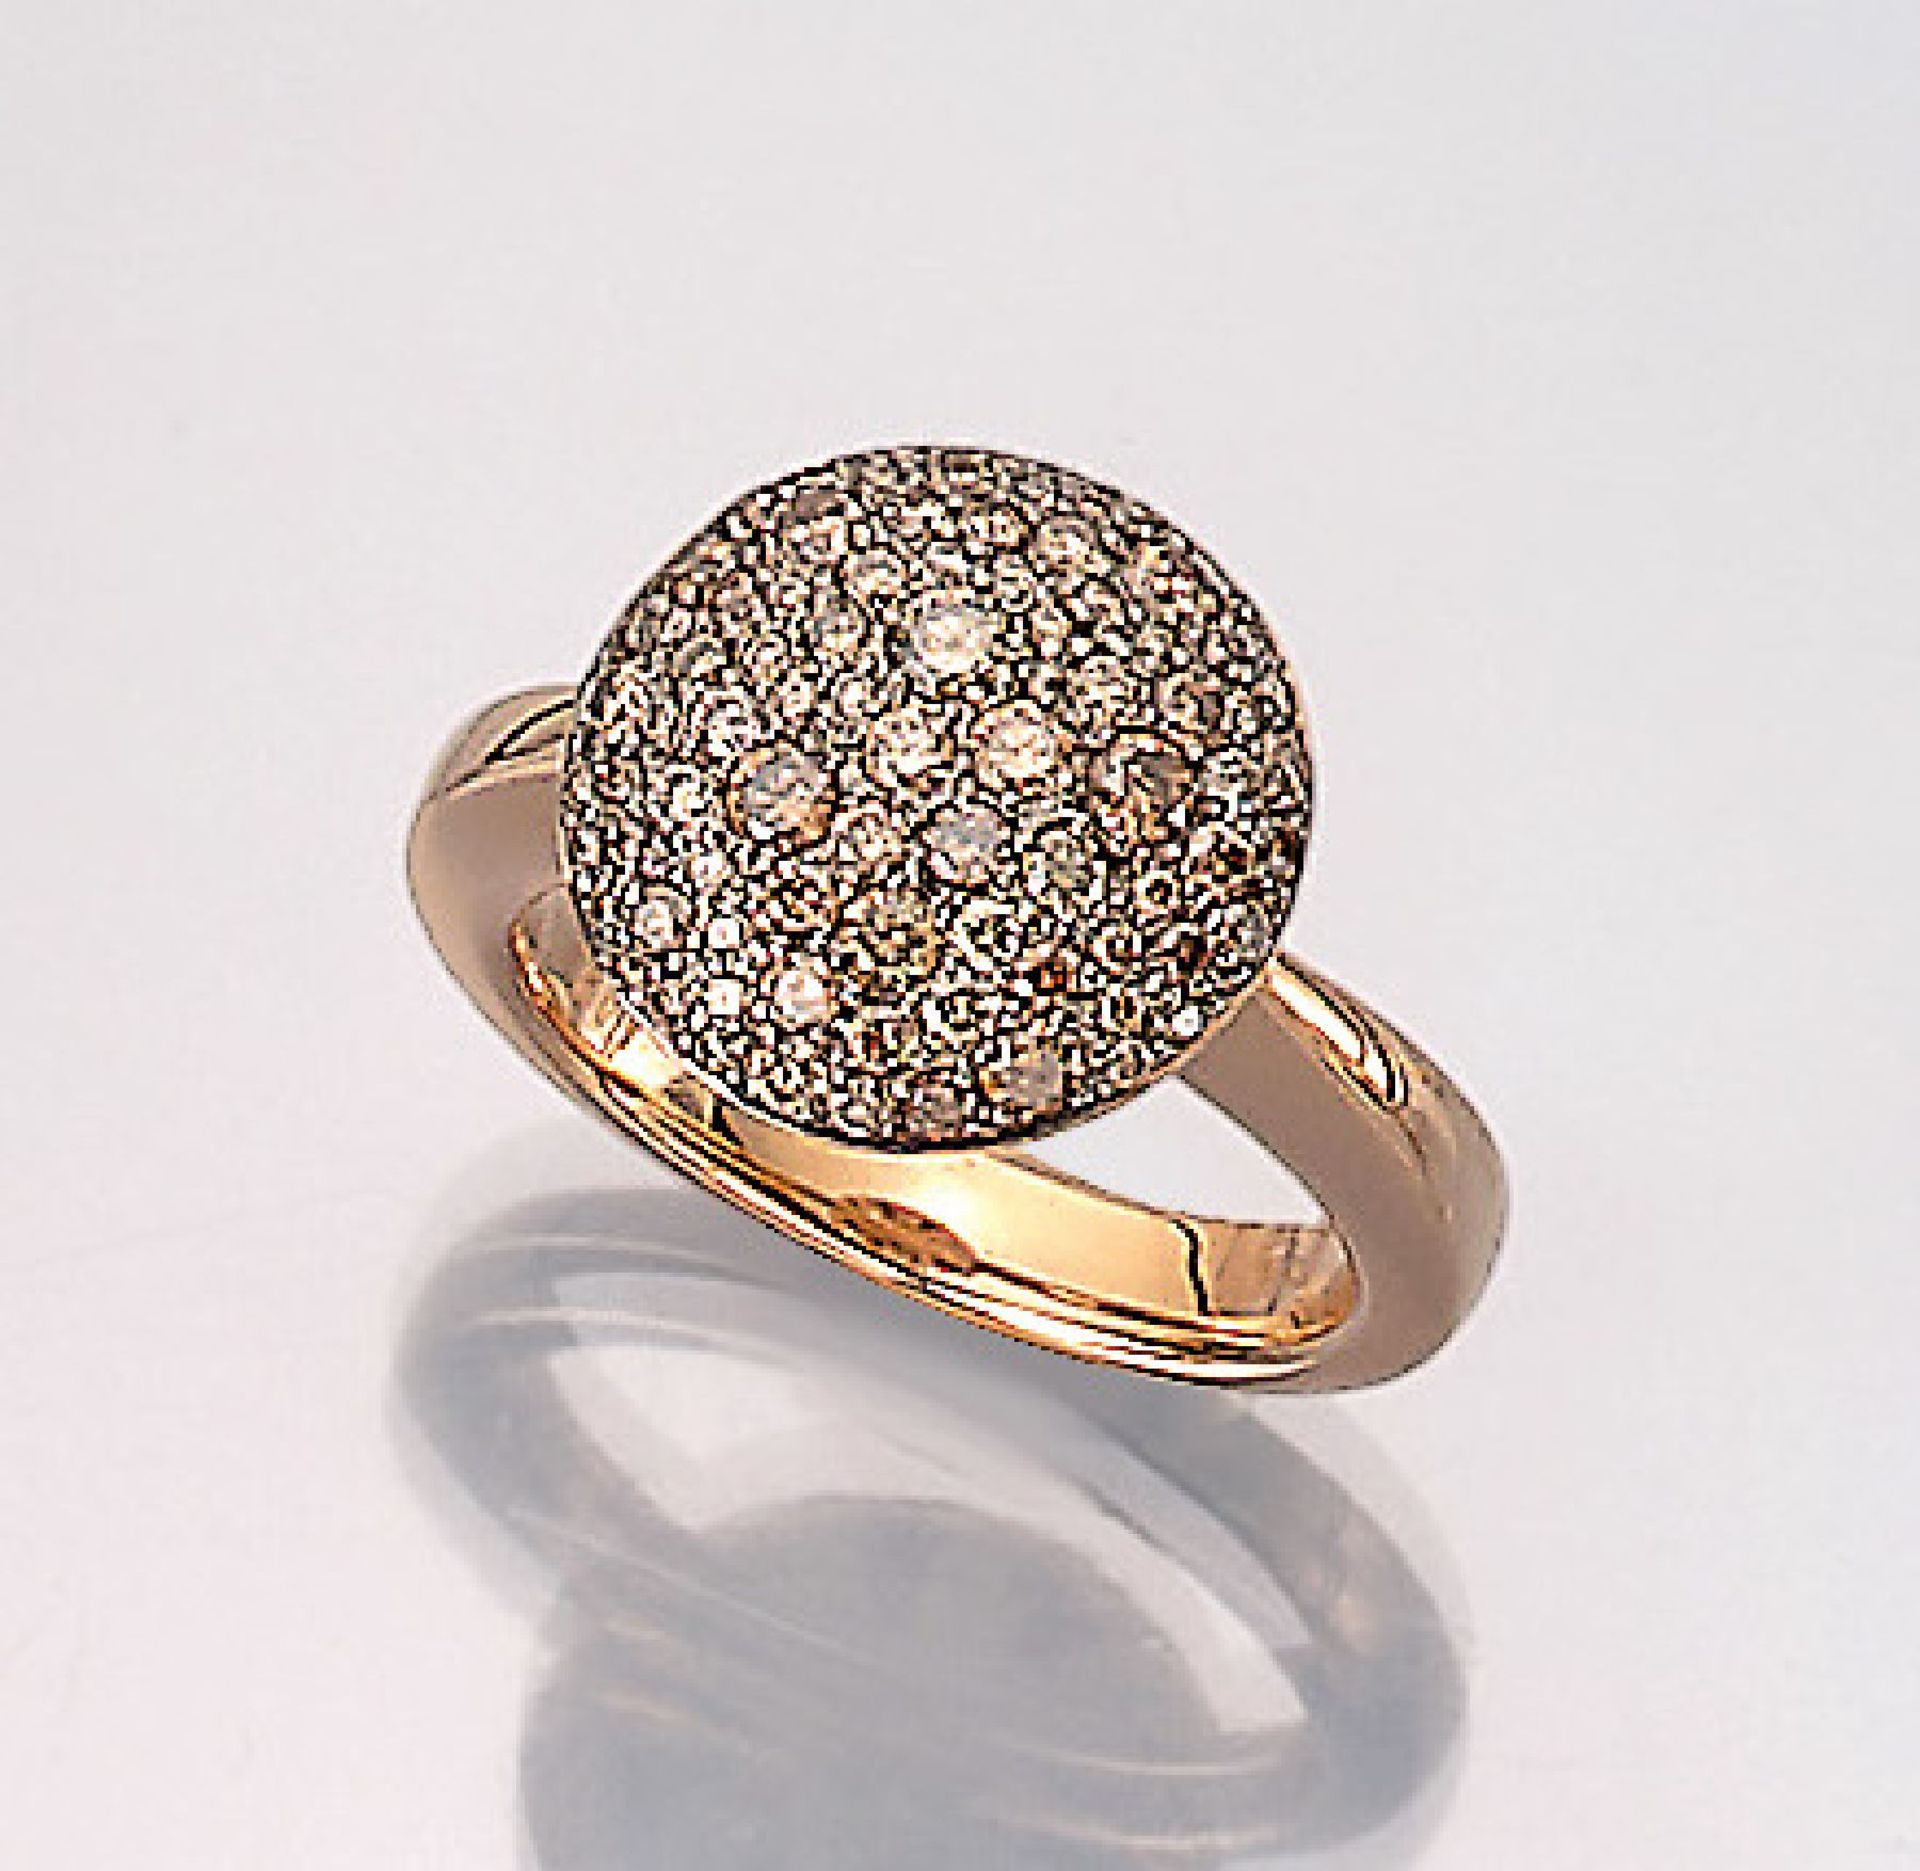 18 kt Gold LEO WITTWER Ring mit Brillanten, RoseG/WG 750/000, Ringkopf in WG gearbeitet,